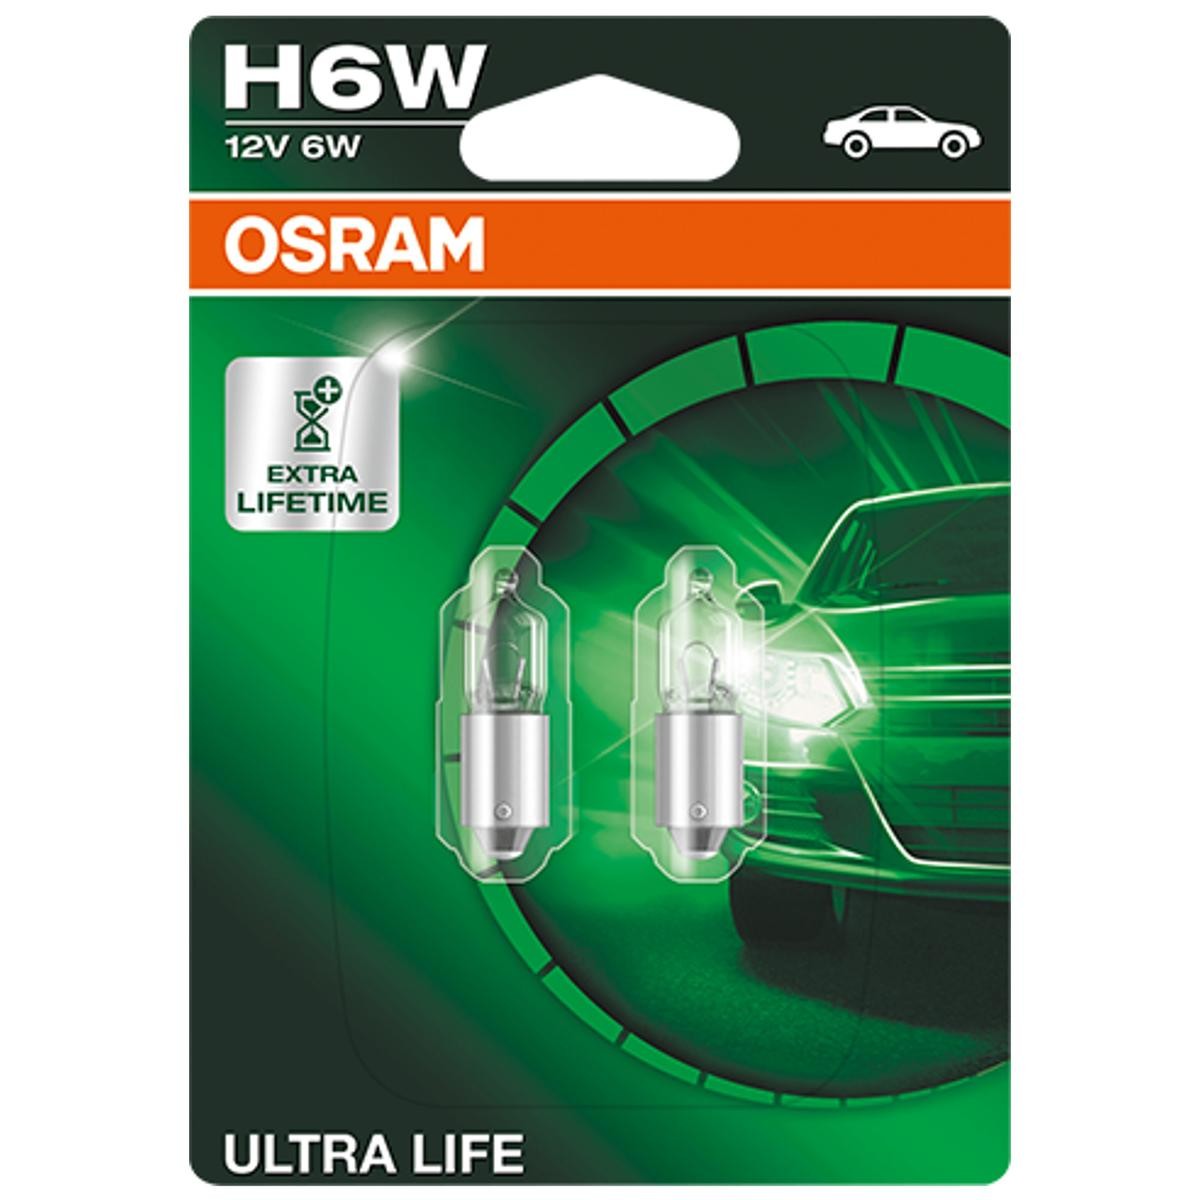 H6W OSRAM ULTRA LIFE 12V 6W, H6W Bulb, indicator 64132ULT-02B buy